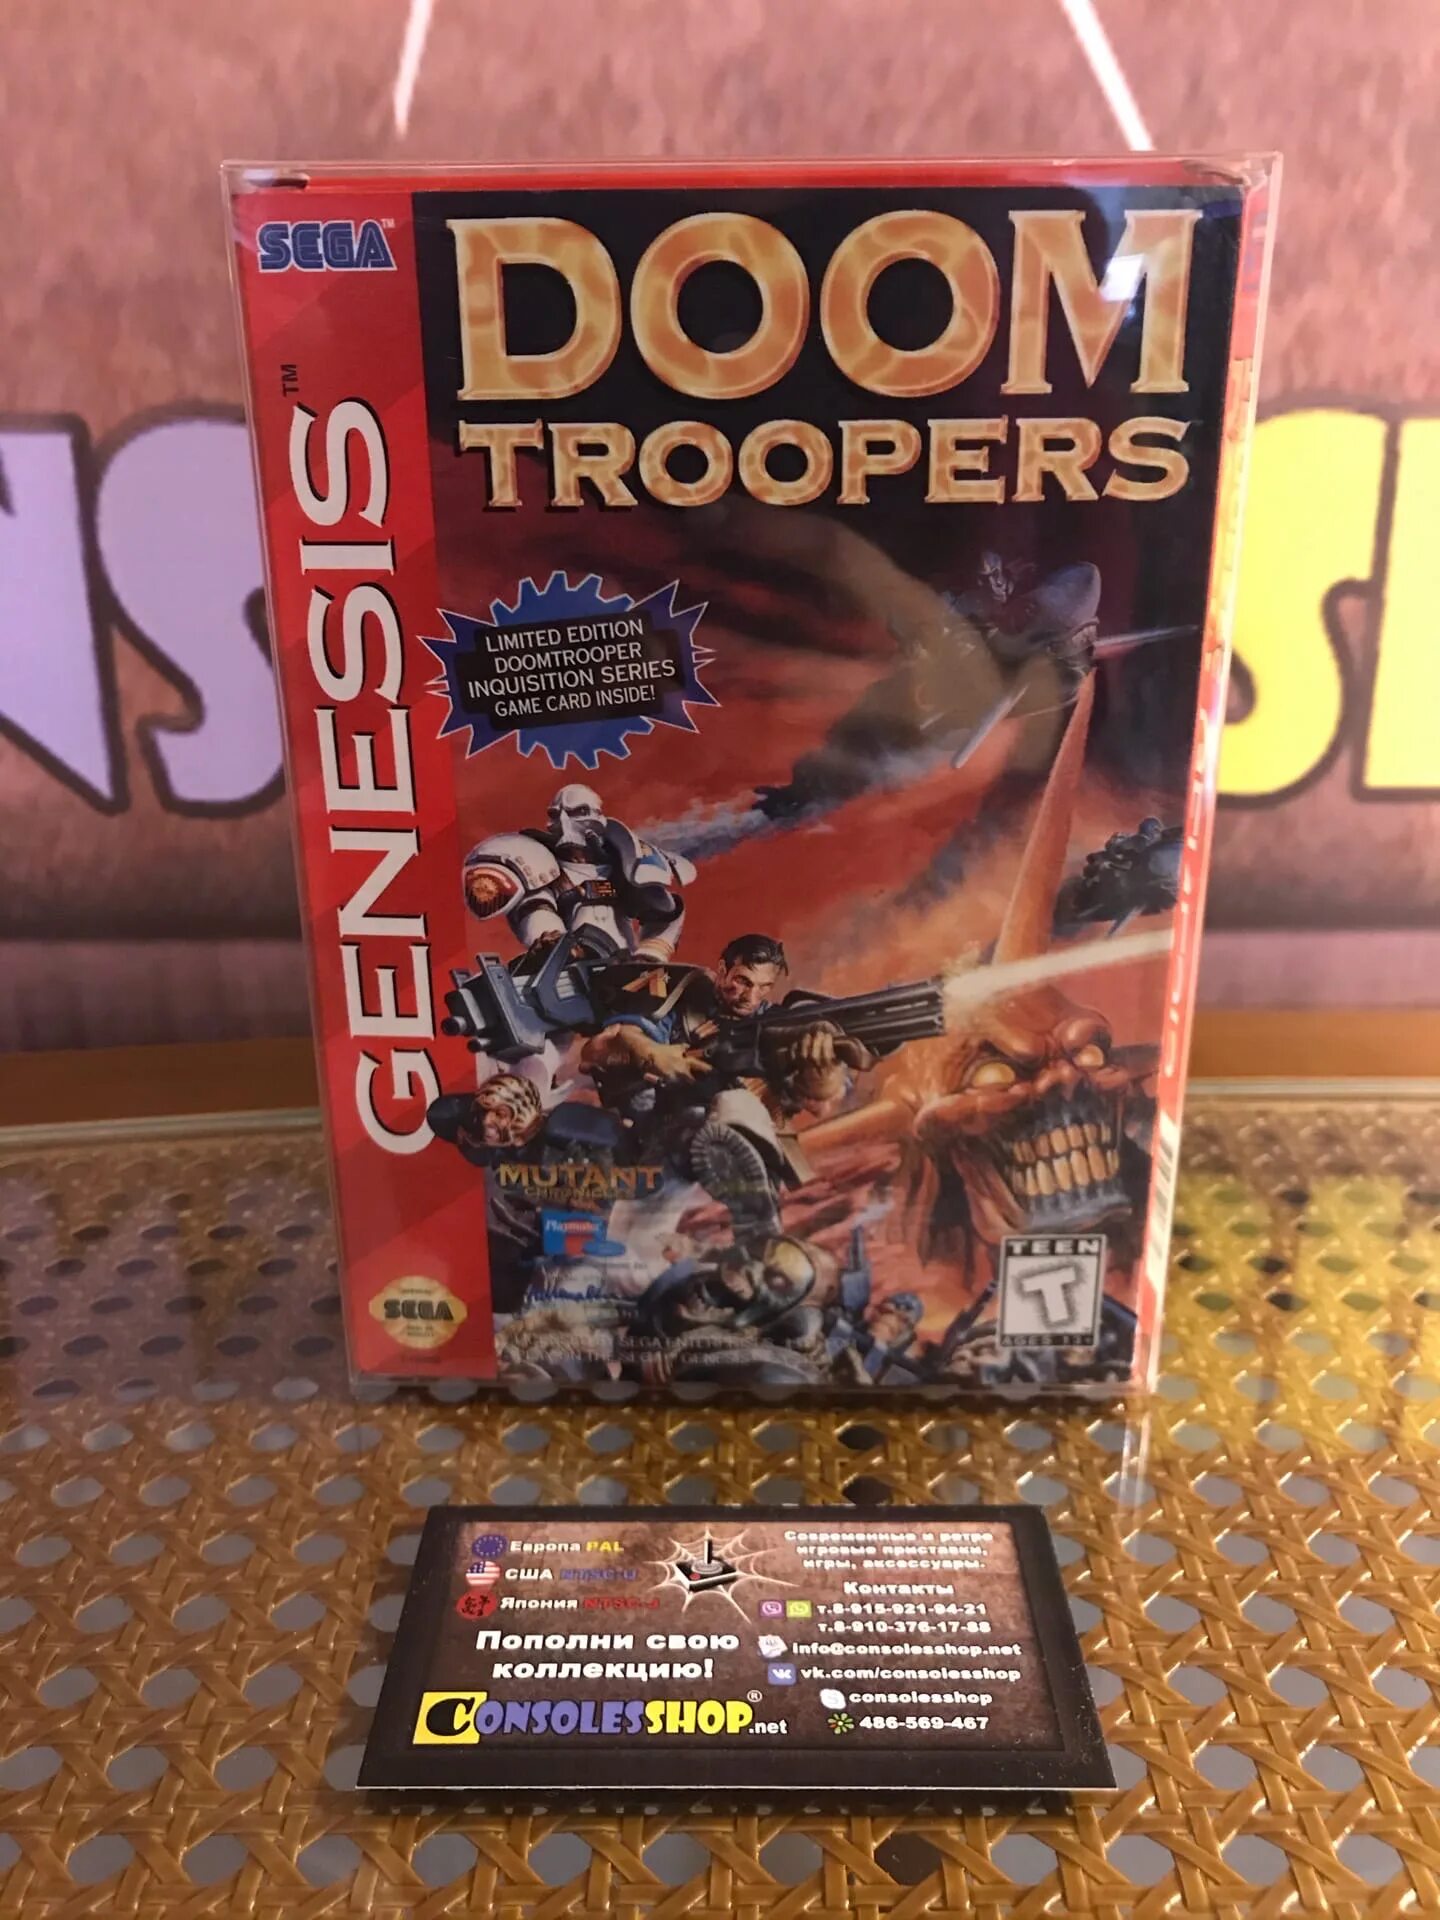 Doom Troopers Sega картридж. Doom Troopers the Mutant Chronicles Sega. Обложка игры Sega Doom Troopers. Дум троперс на сеге. Doom troopers sega